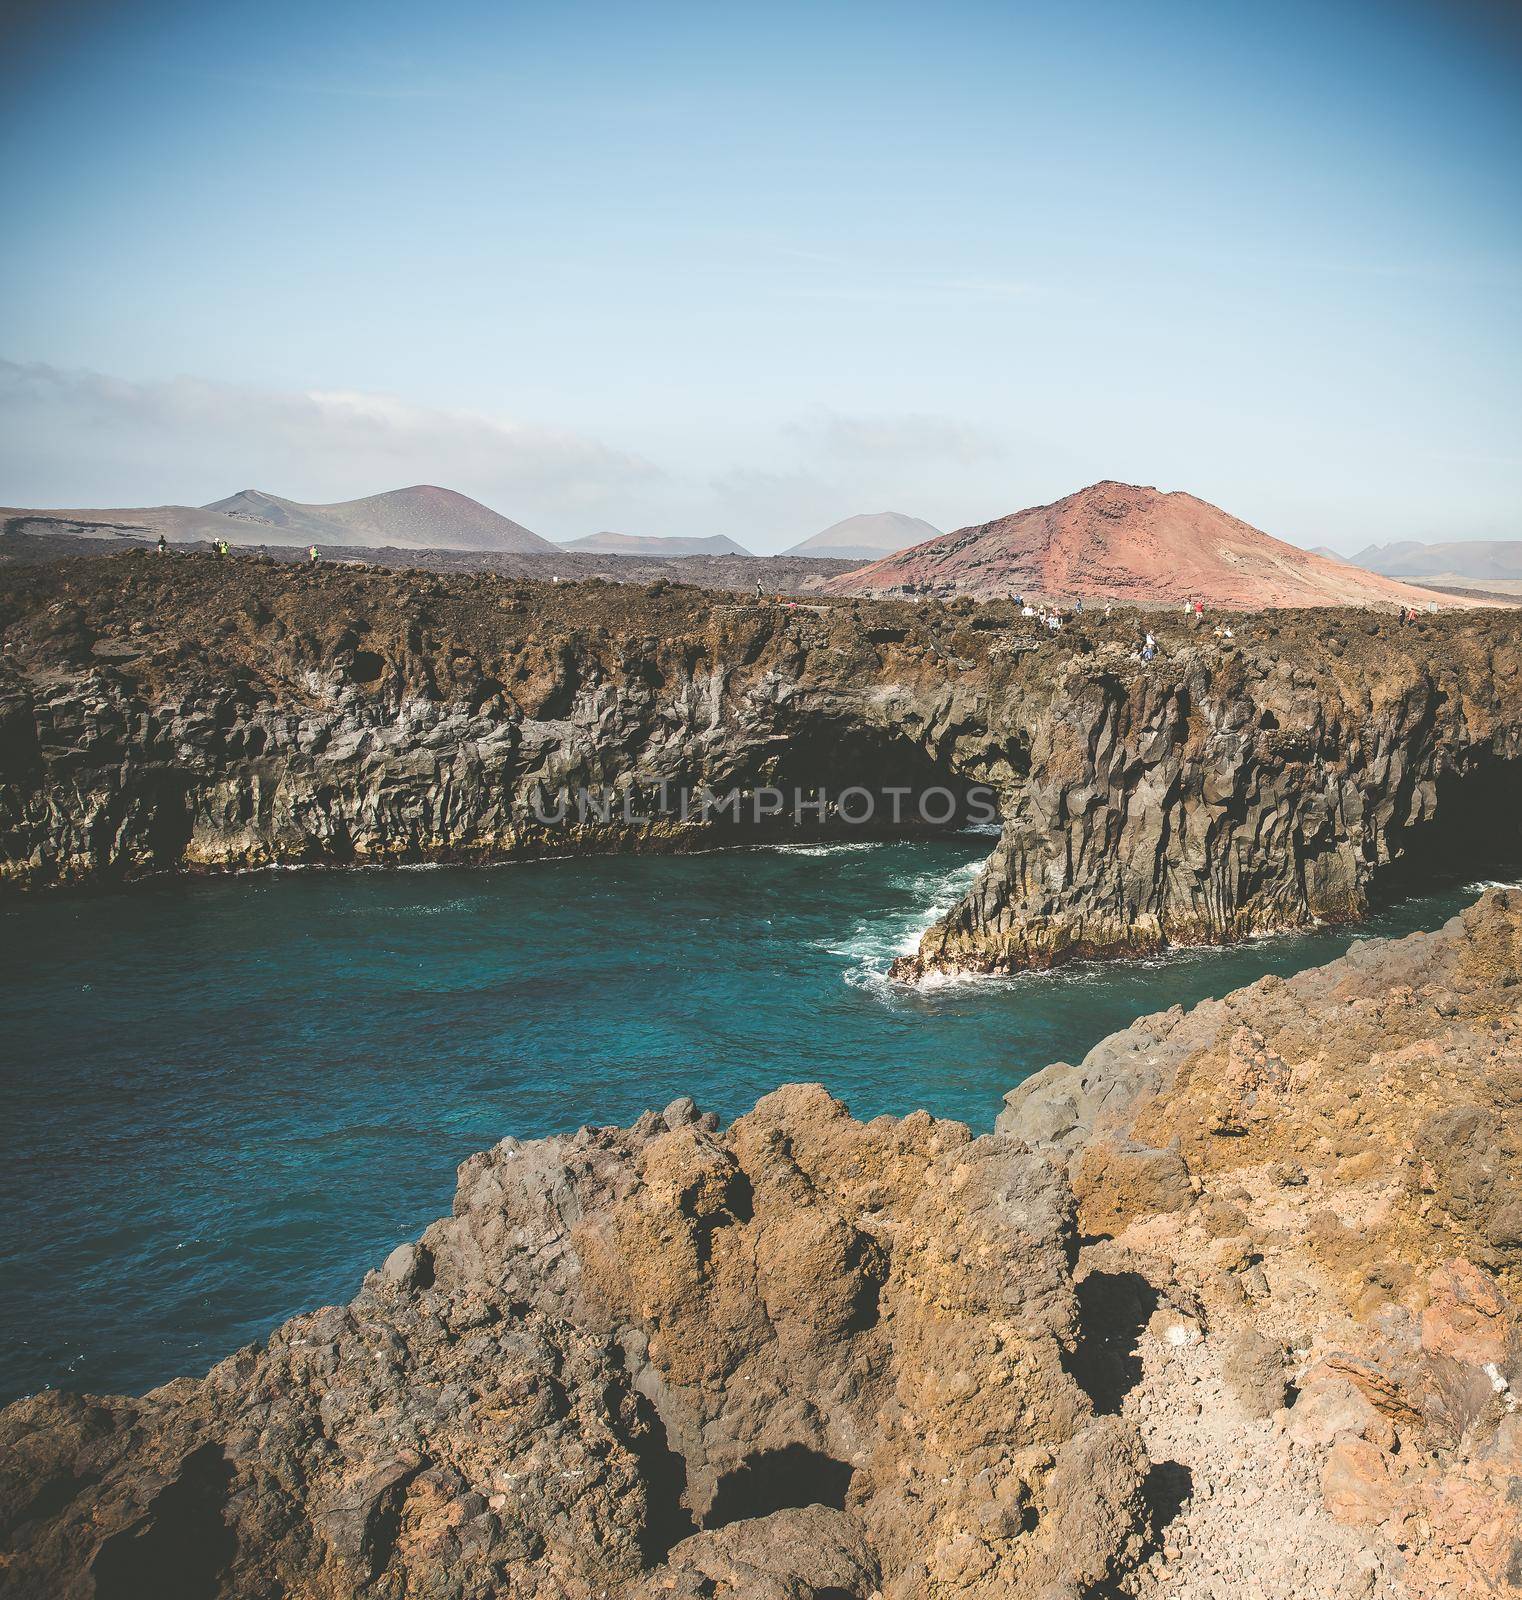 cliffs on the coast by GekaSkr